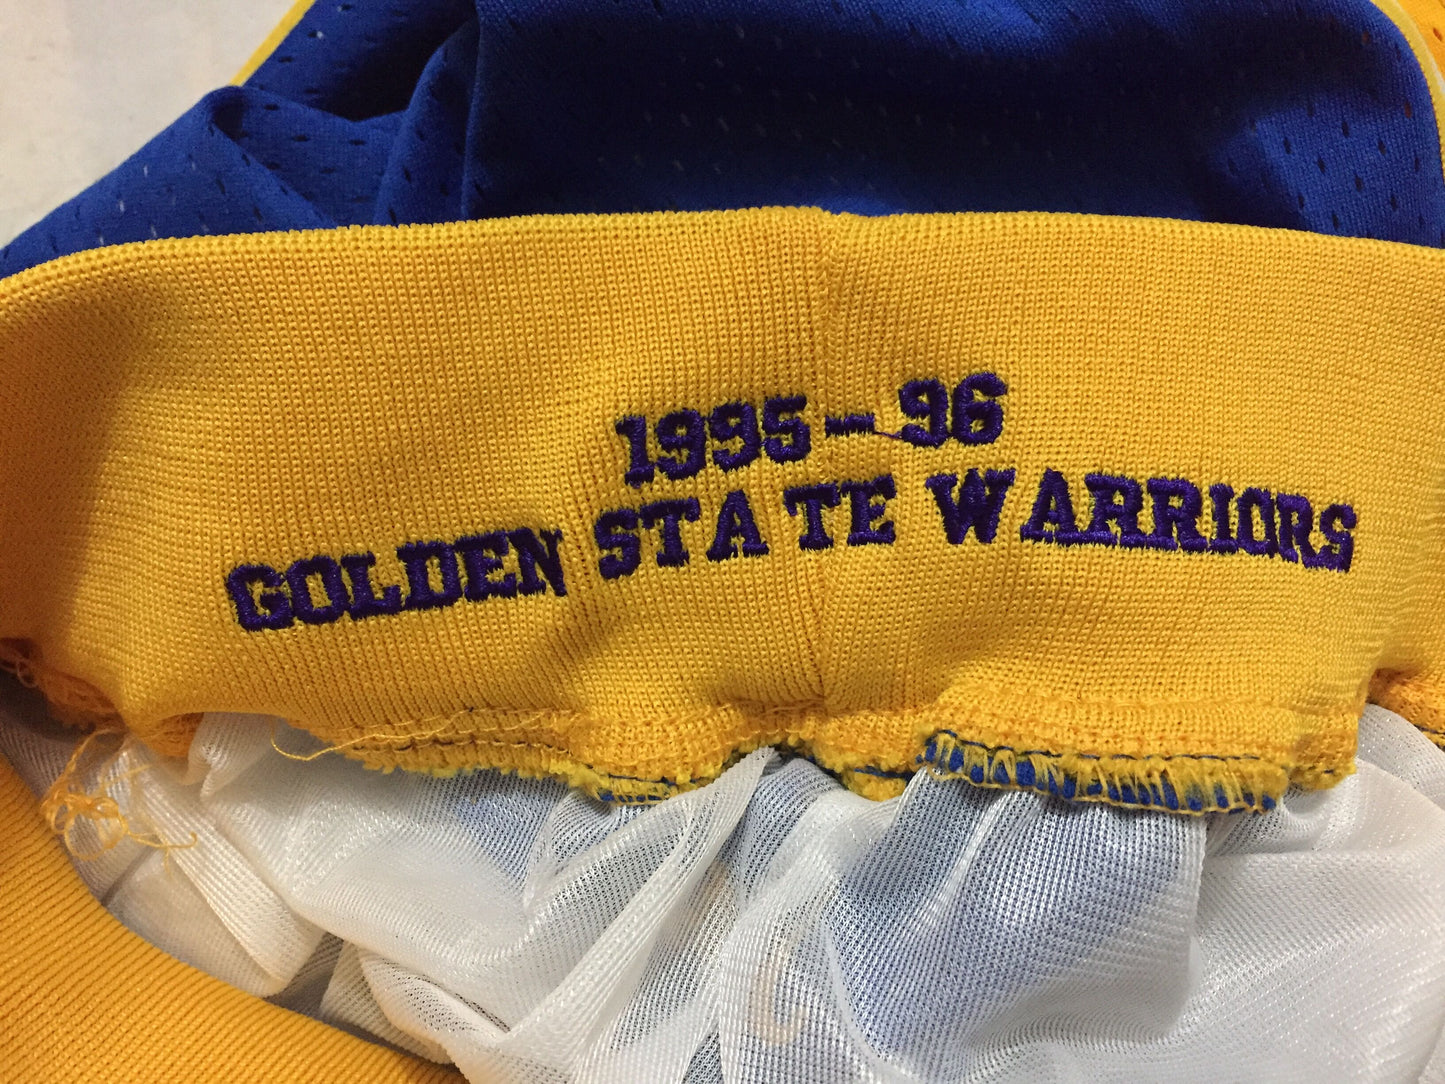 Just Don - Golden State Warriors 1996 Blue Retro